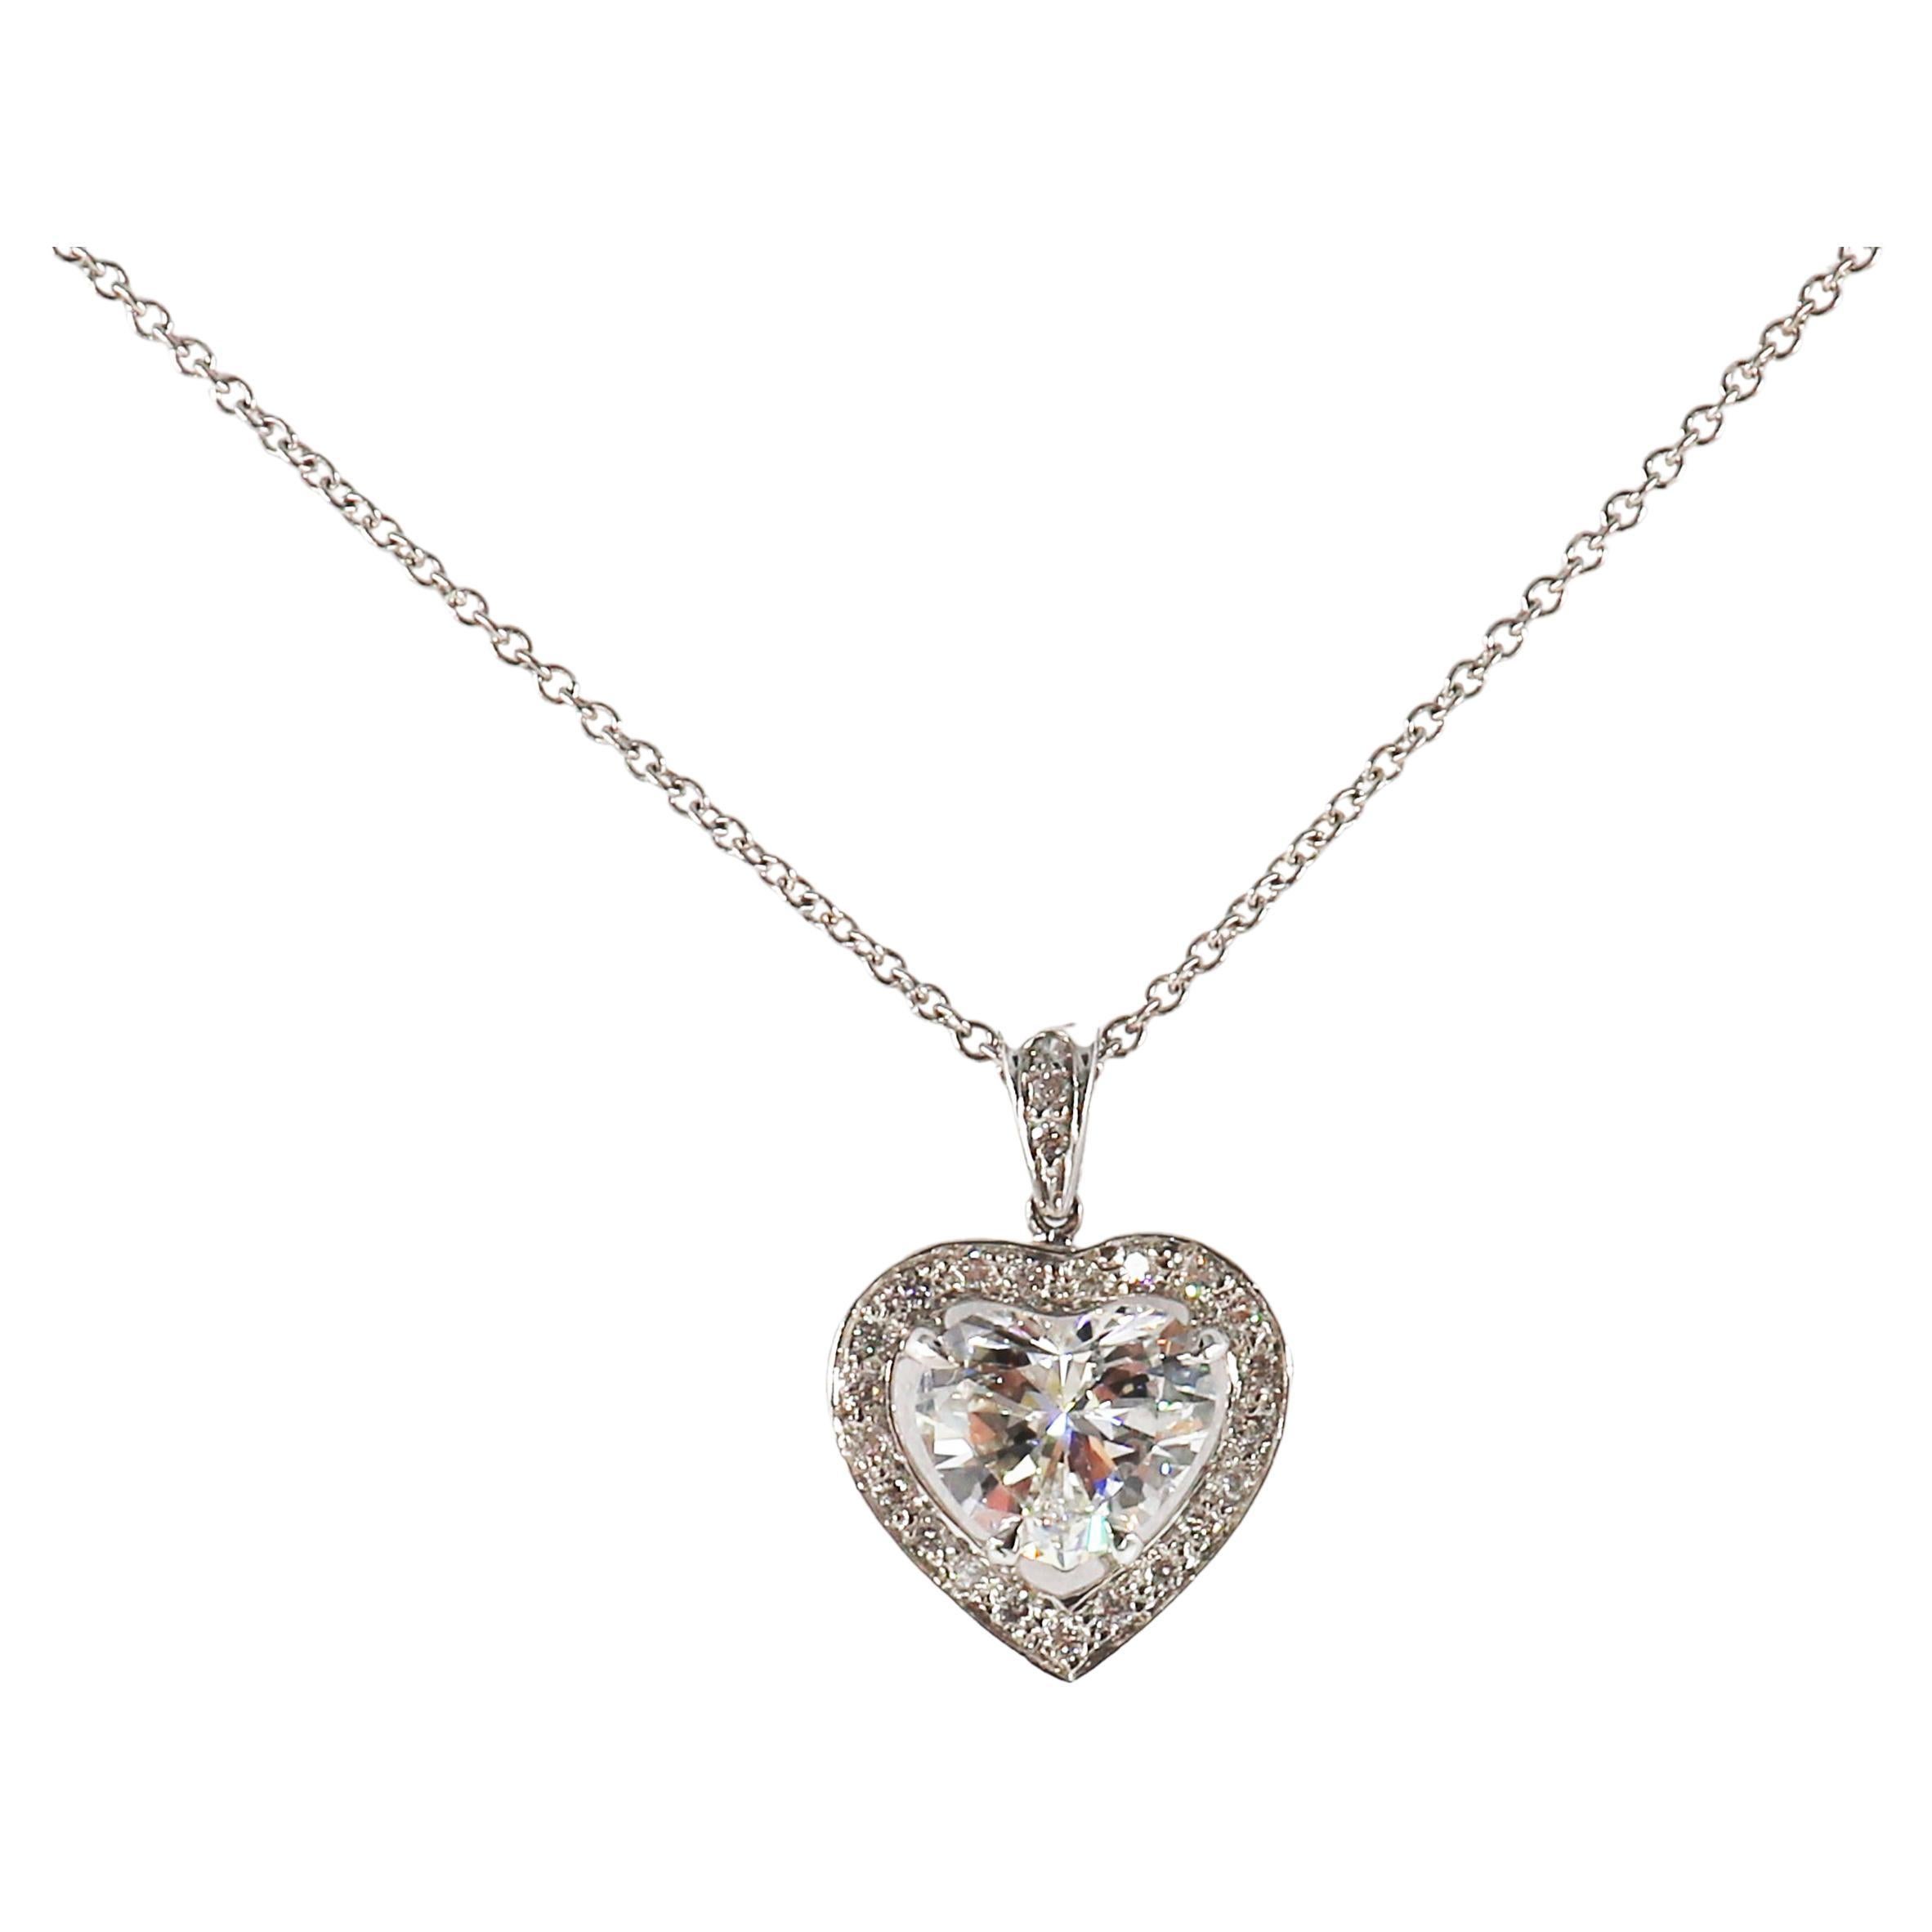 J. Birnbach 1.52 Carat Heart-shaped Diamond Pendant Necklace GIA Certified